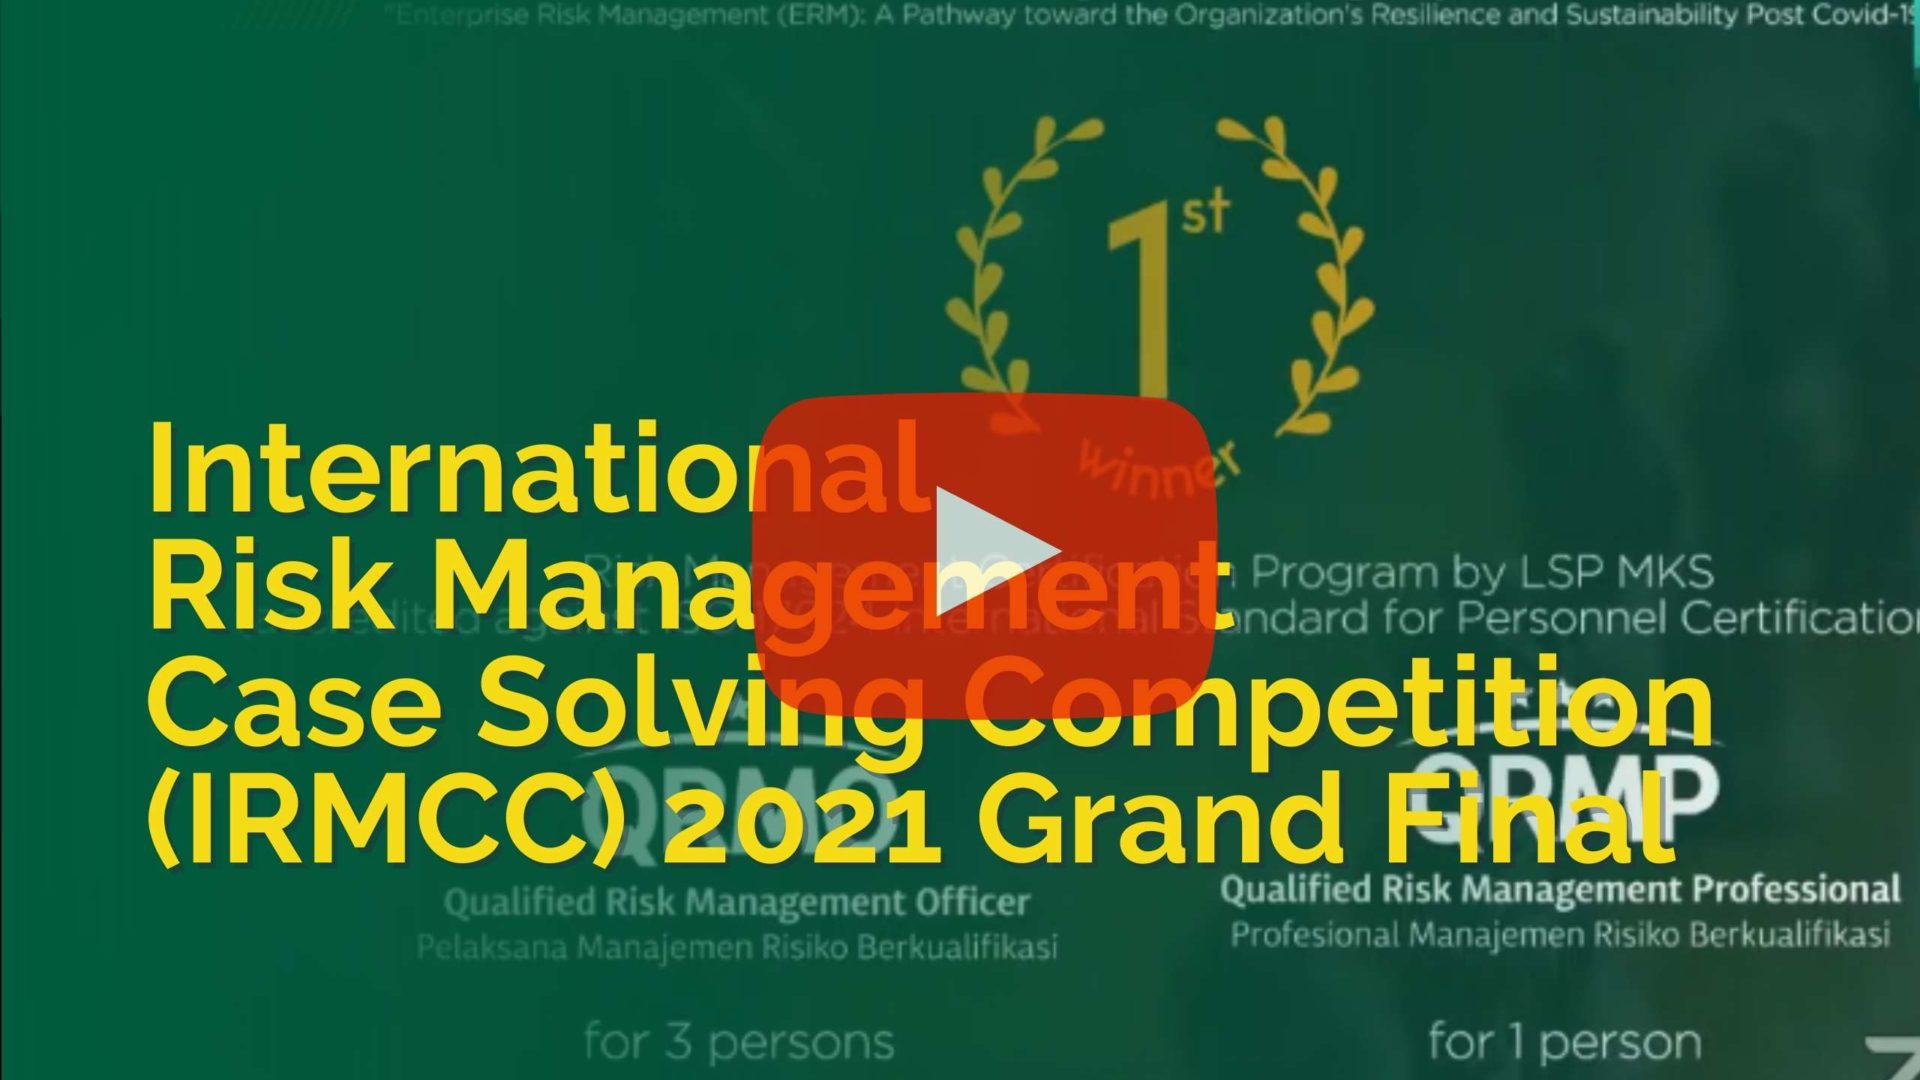 International Risk Management Case Solving Competition (IRMCC) 2021 Grand Final